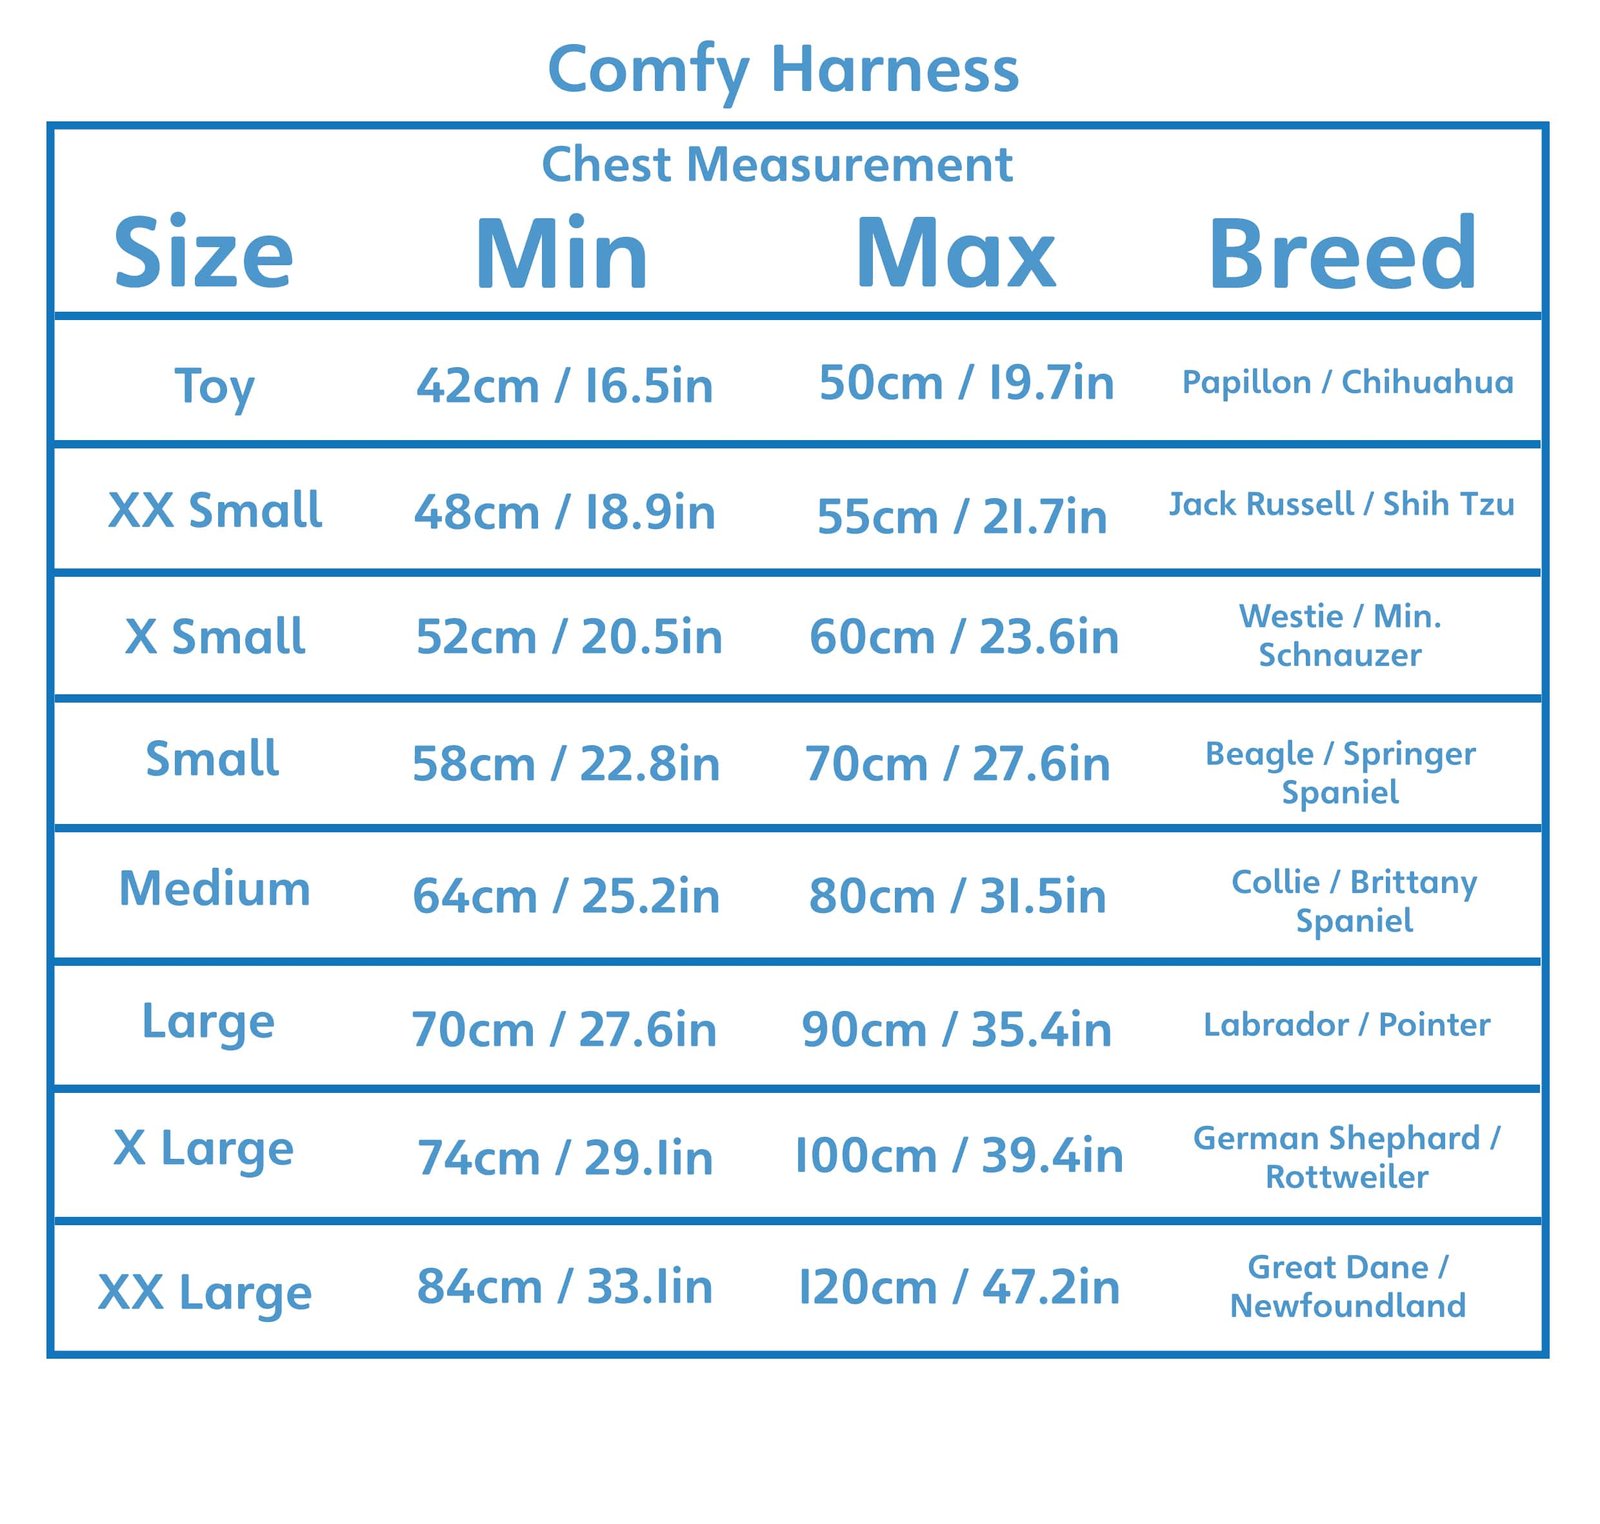 Halti Size Chart